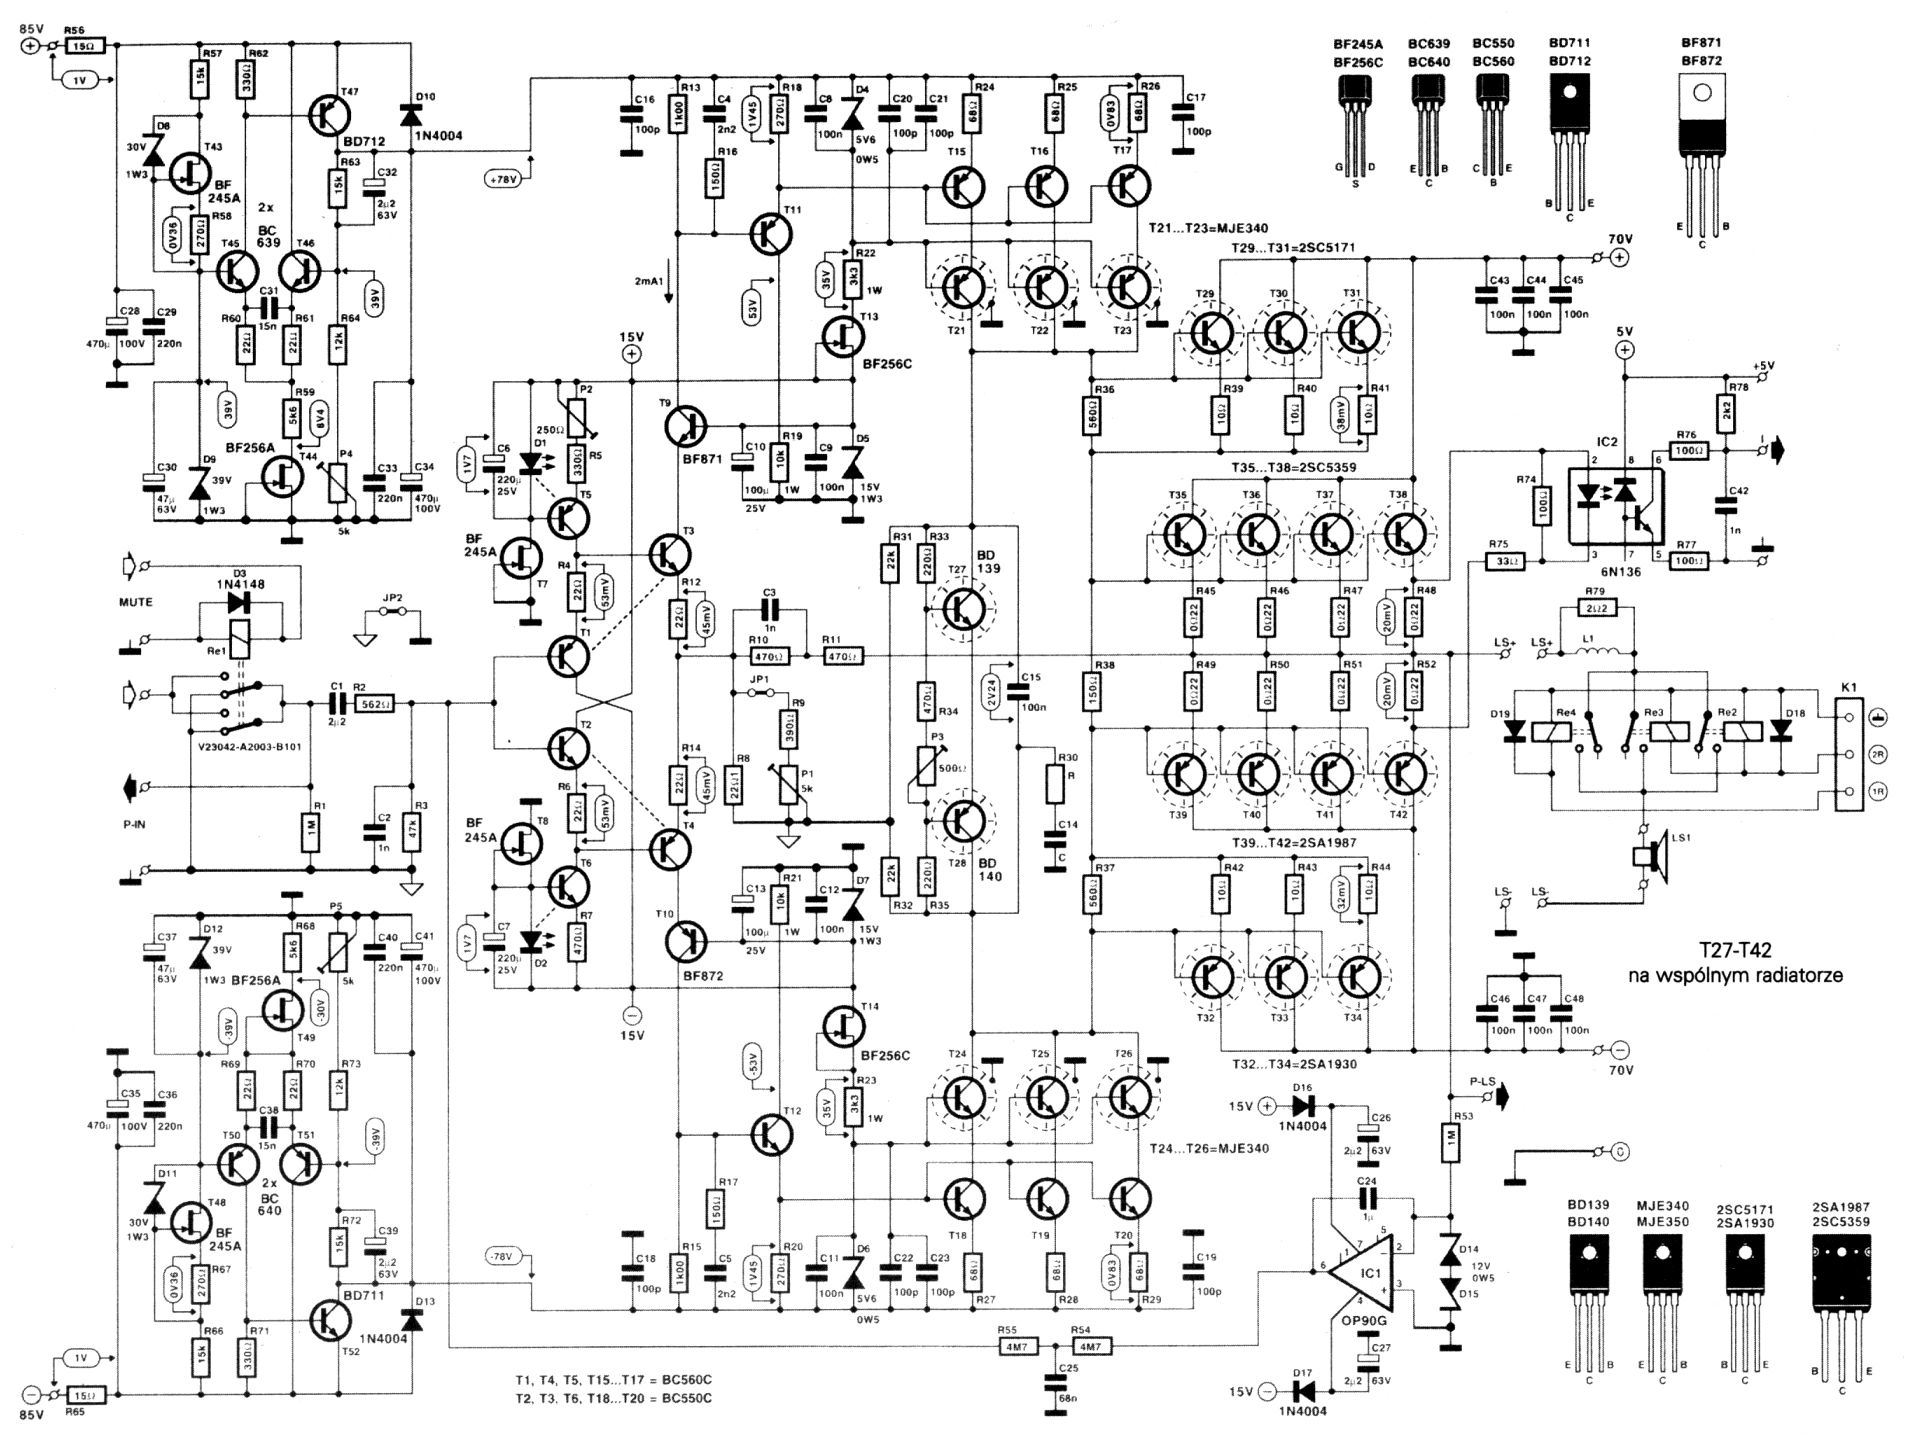 Power Amp Diagram - Power Amplifier 2000 Watt - Power Amp Diagram